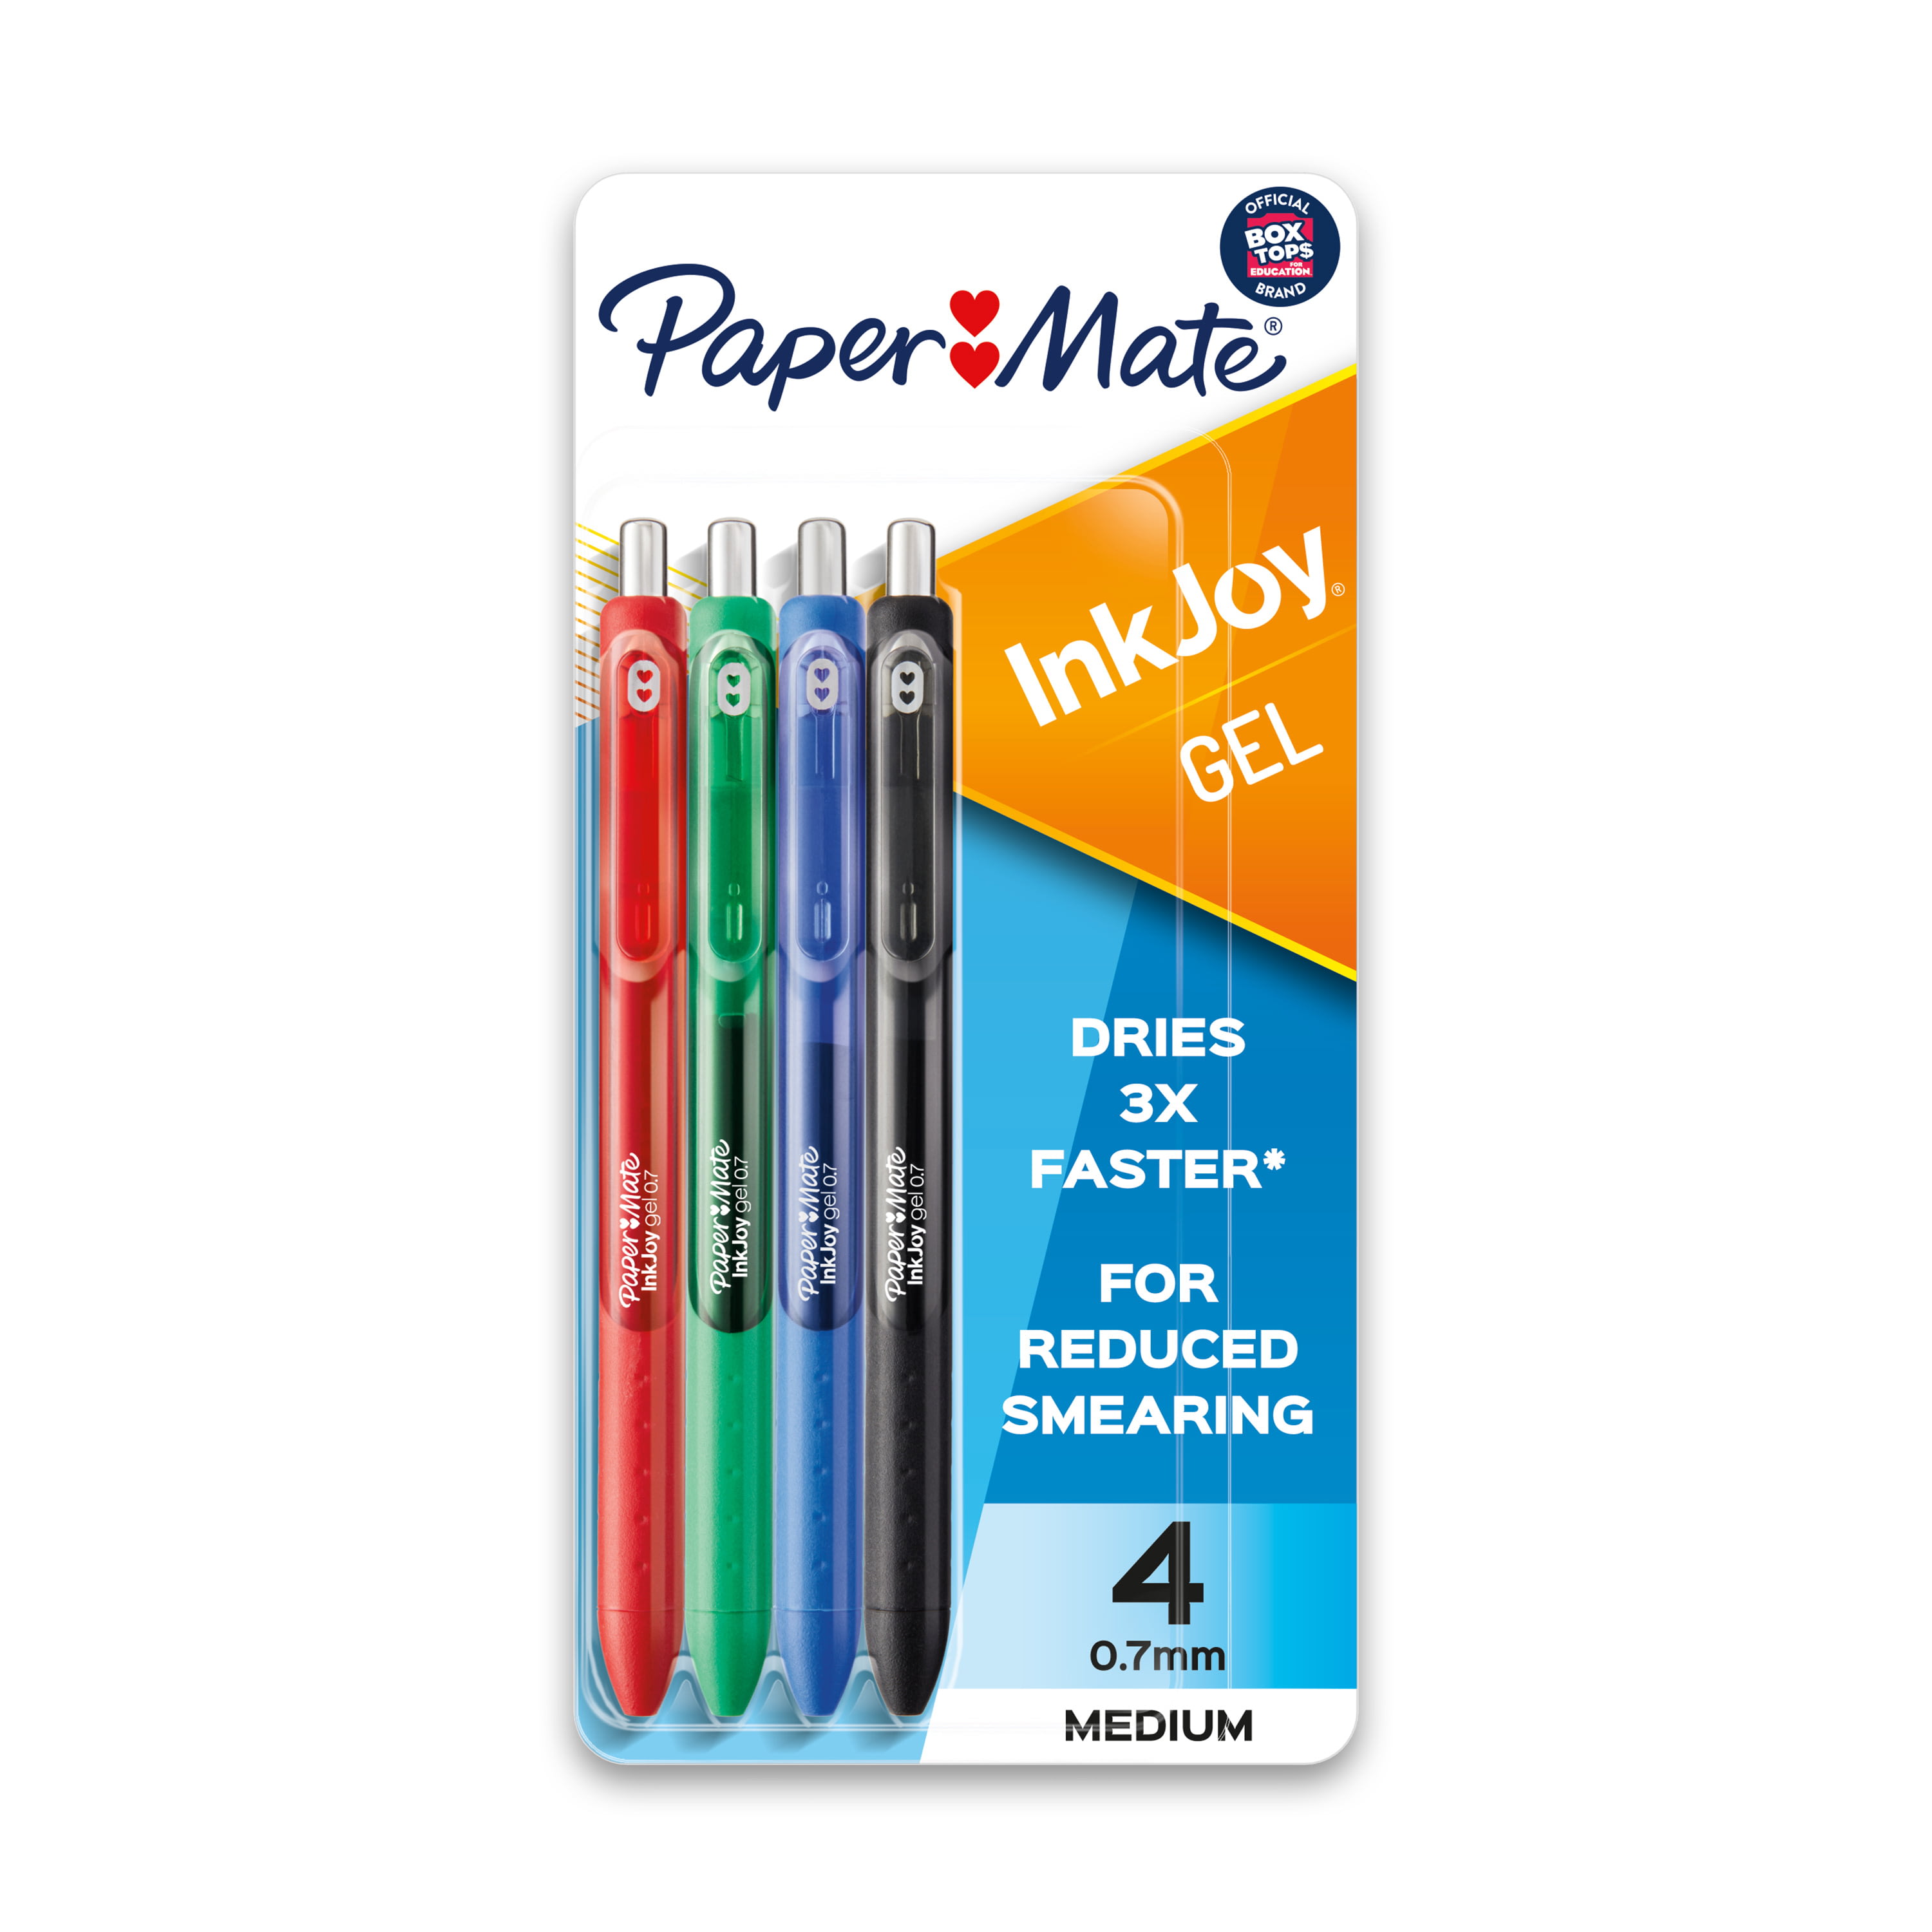 Paper Mate Ballpoint Pens, Write Bros. Black Ink Pen, Medium Point, 20  Count